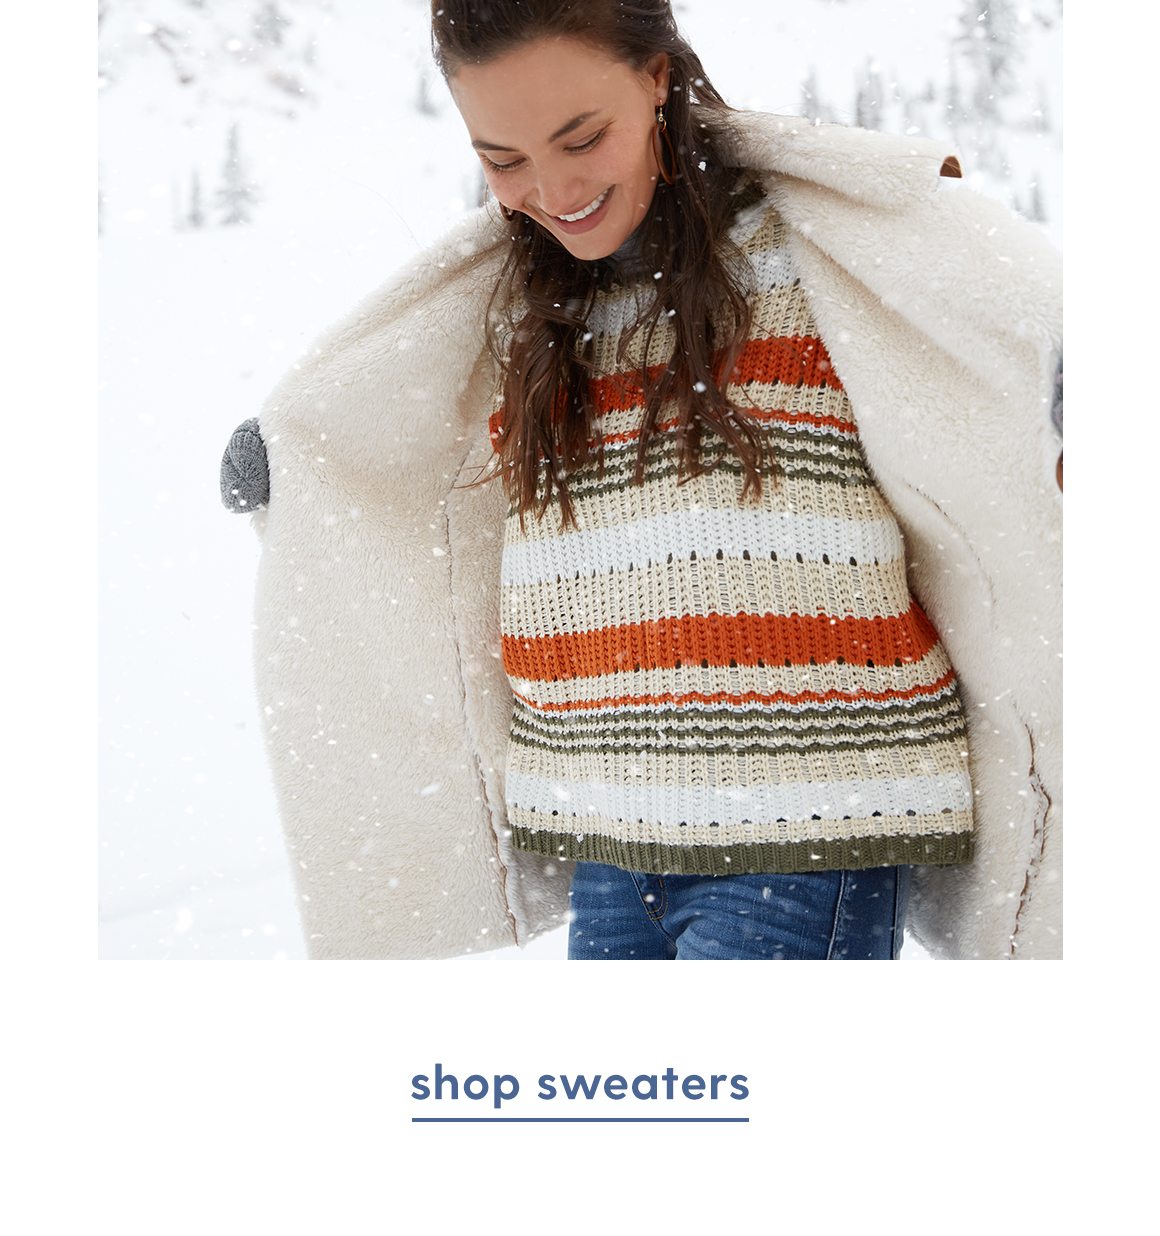 Shop sweaters.